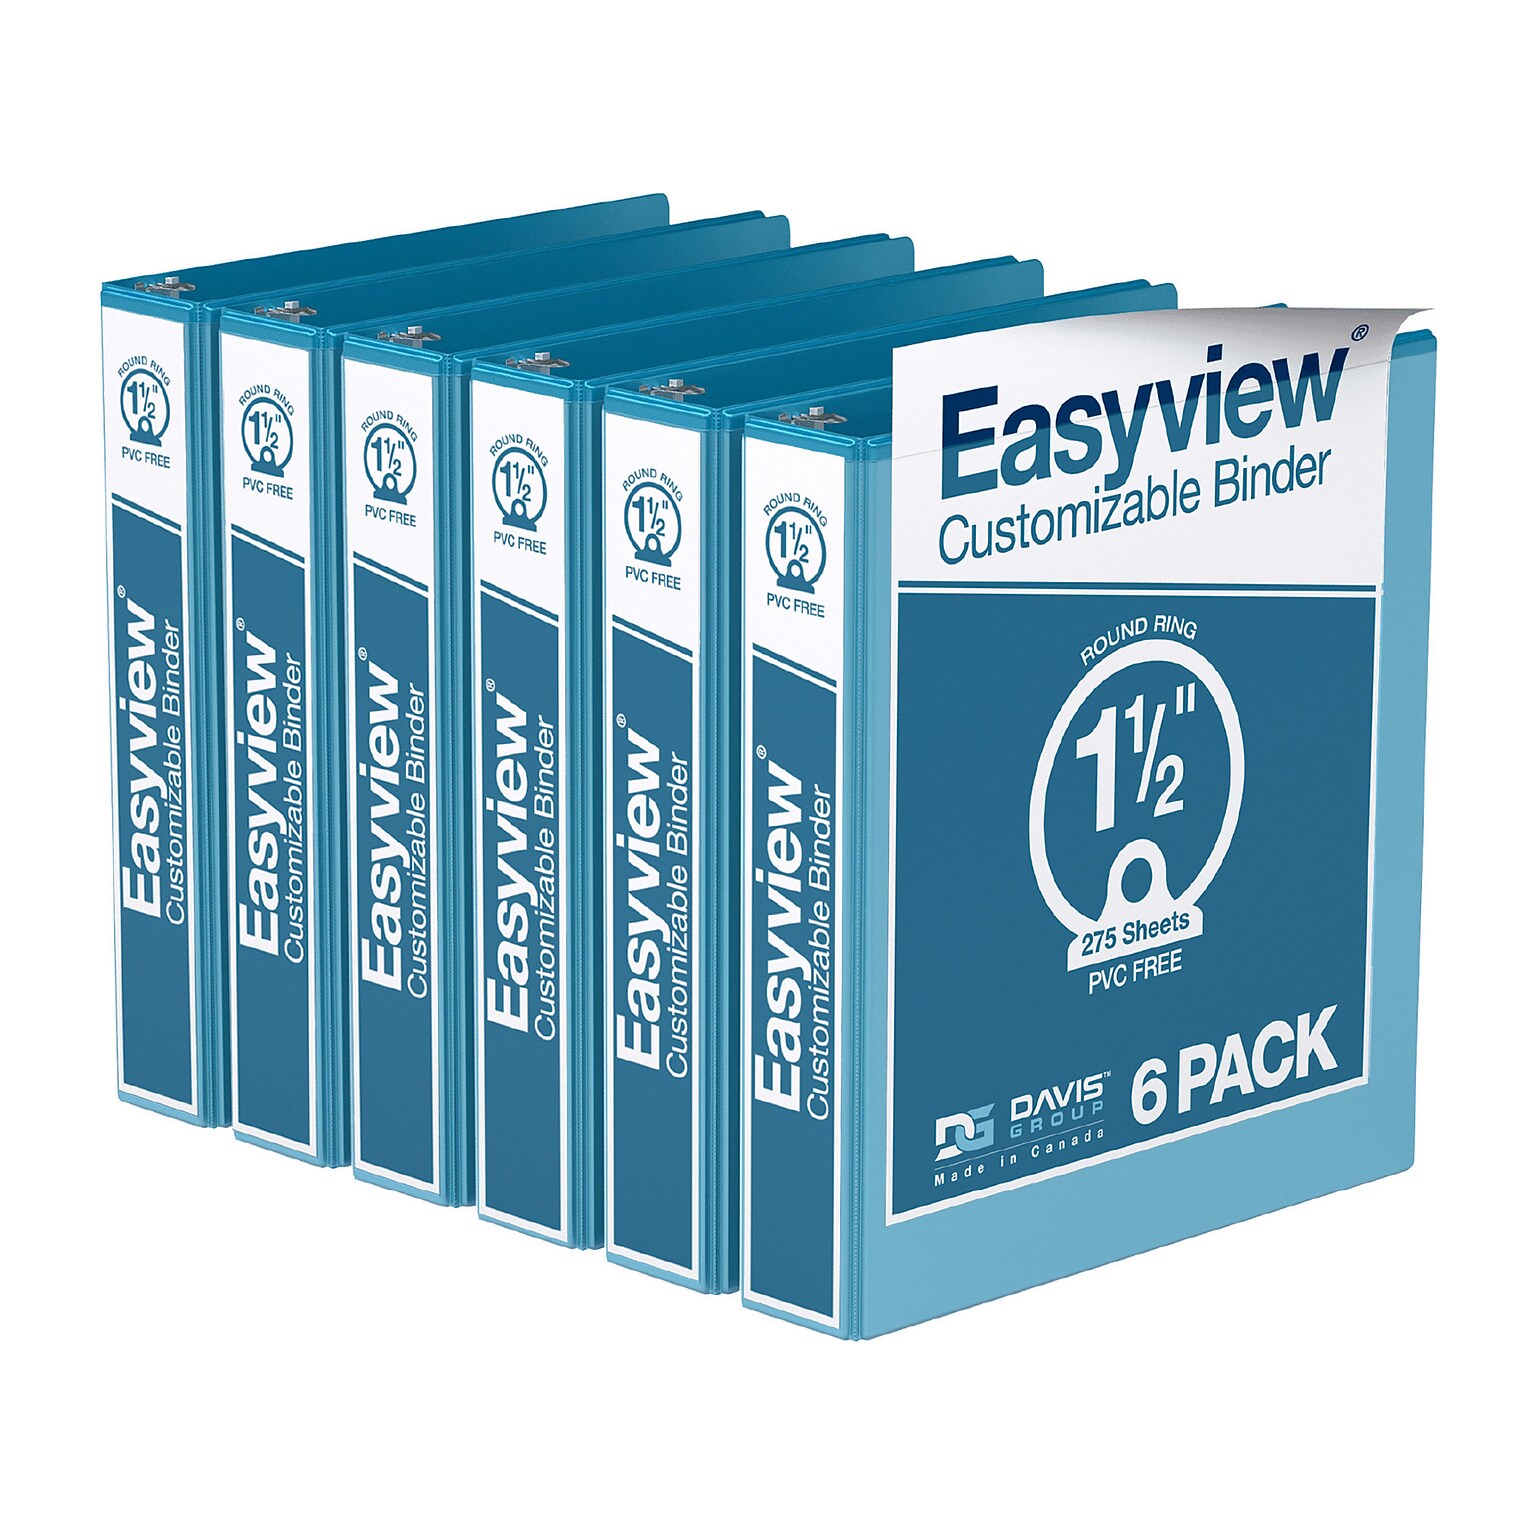 Davis Group Easyview Premium 1 1/2 3-Ring View Binders, Turquoise Blue, 6/Pack (8412-52-06)